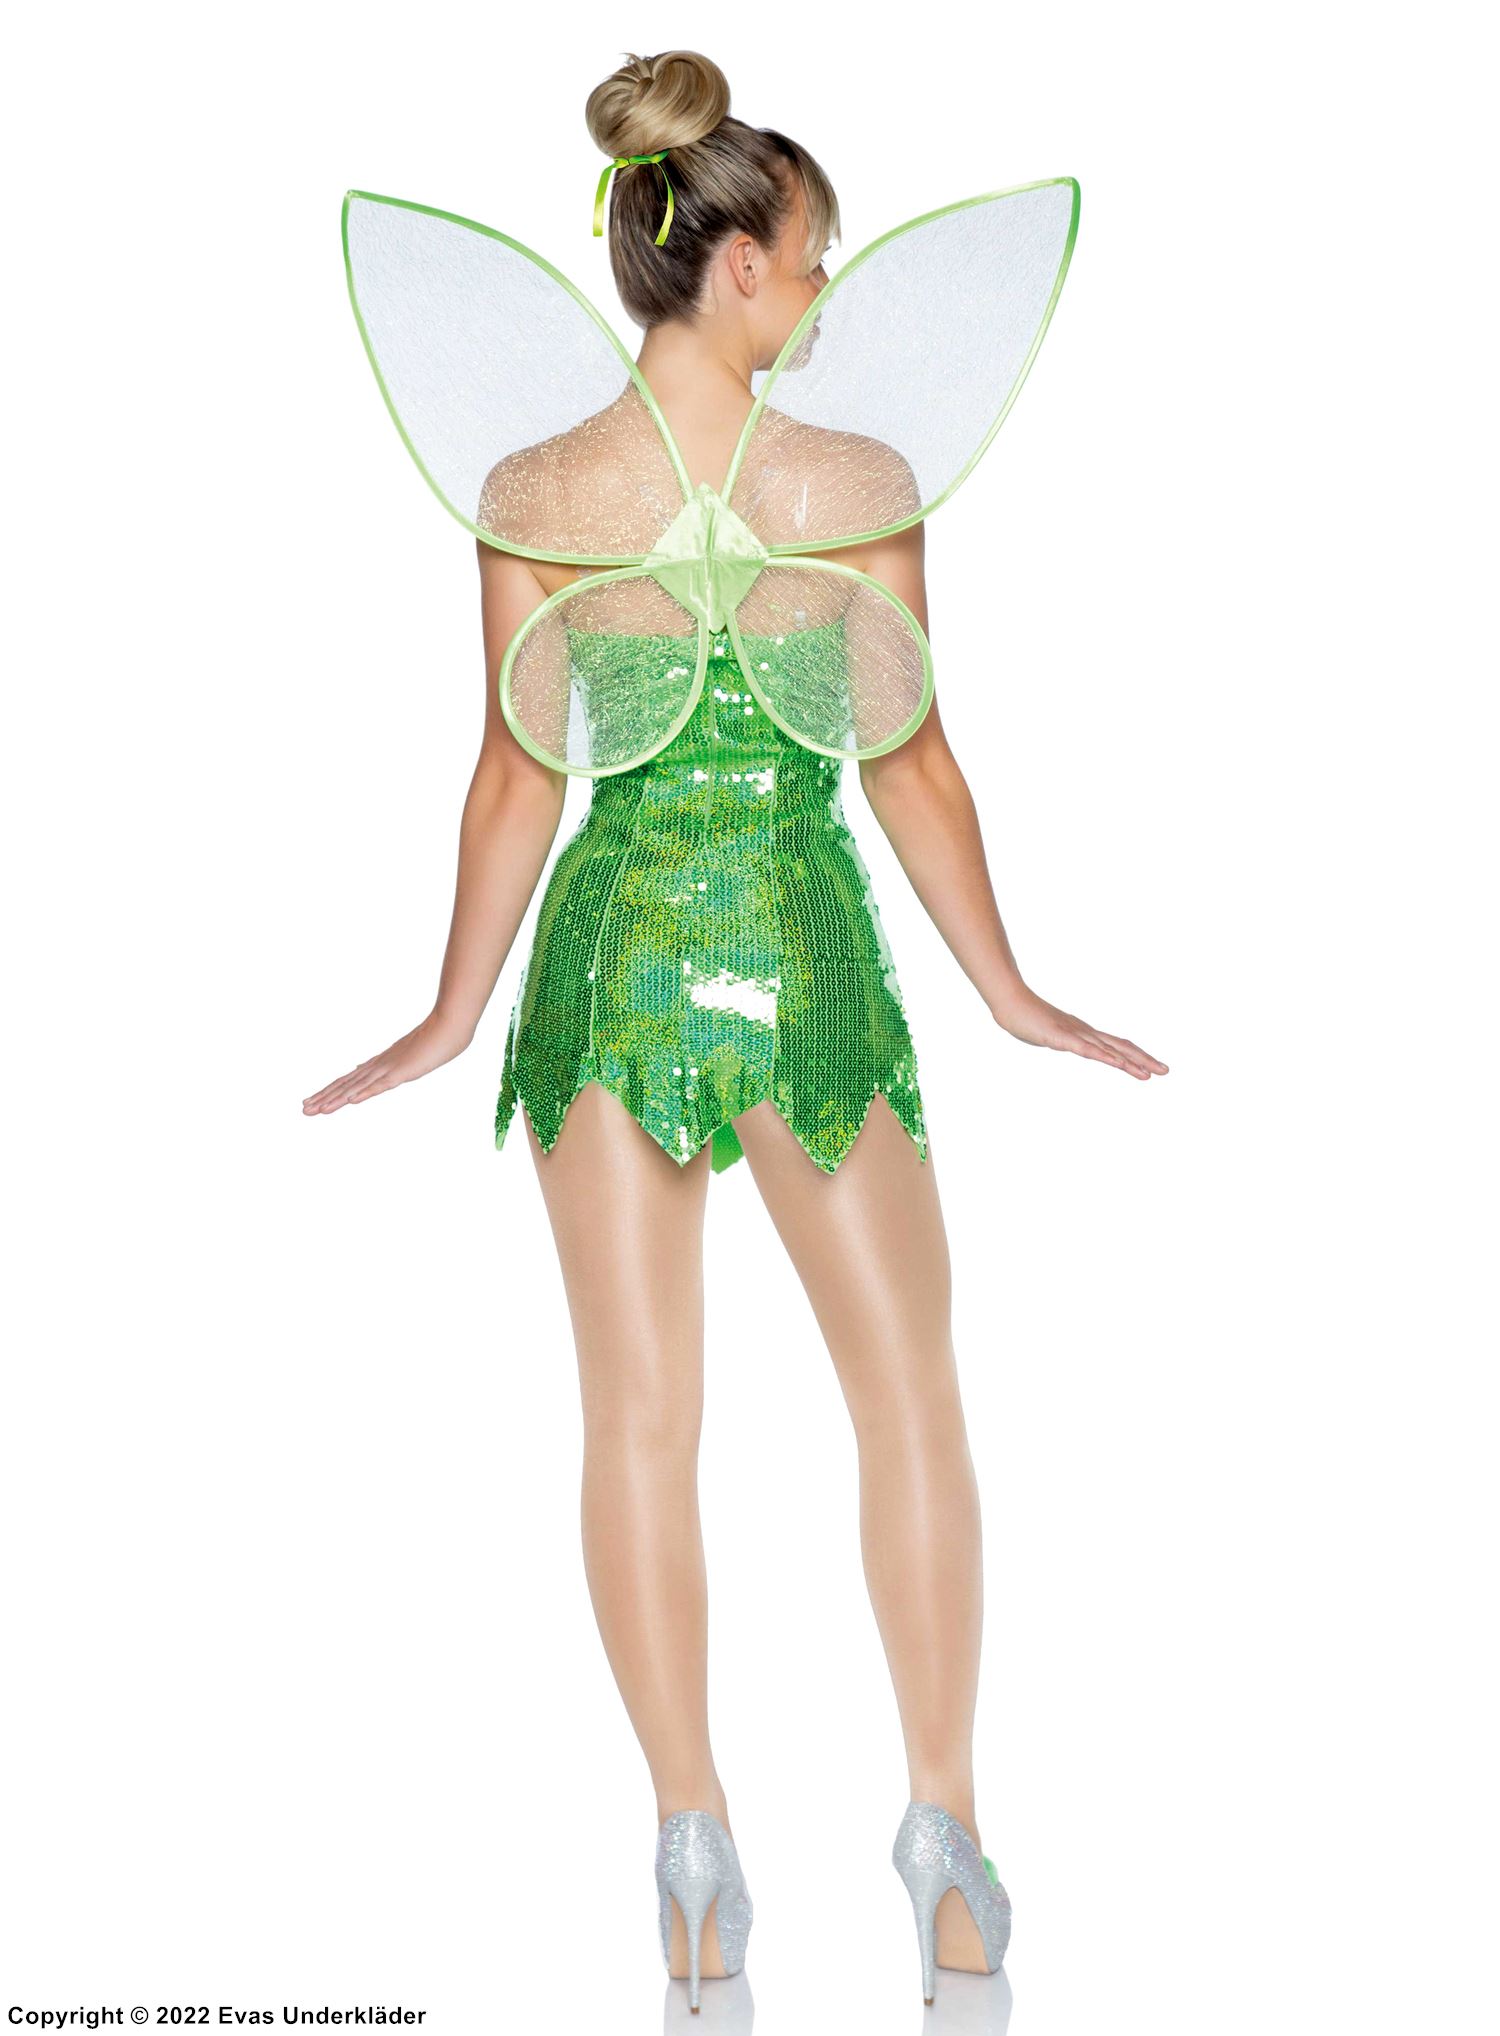 Tinkerbell, costume dress, sequins, transparent straps